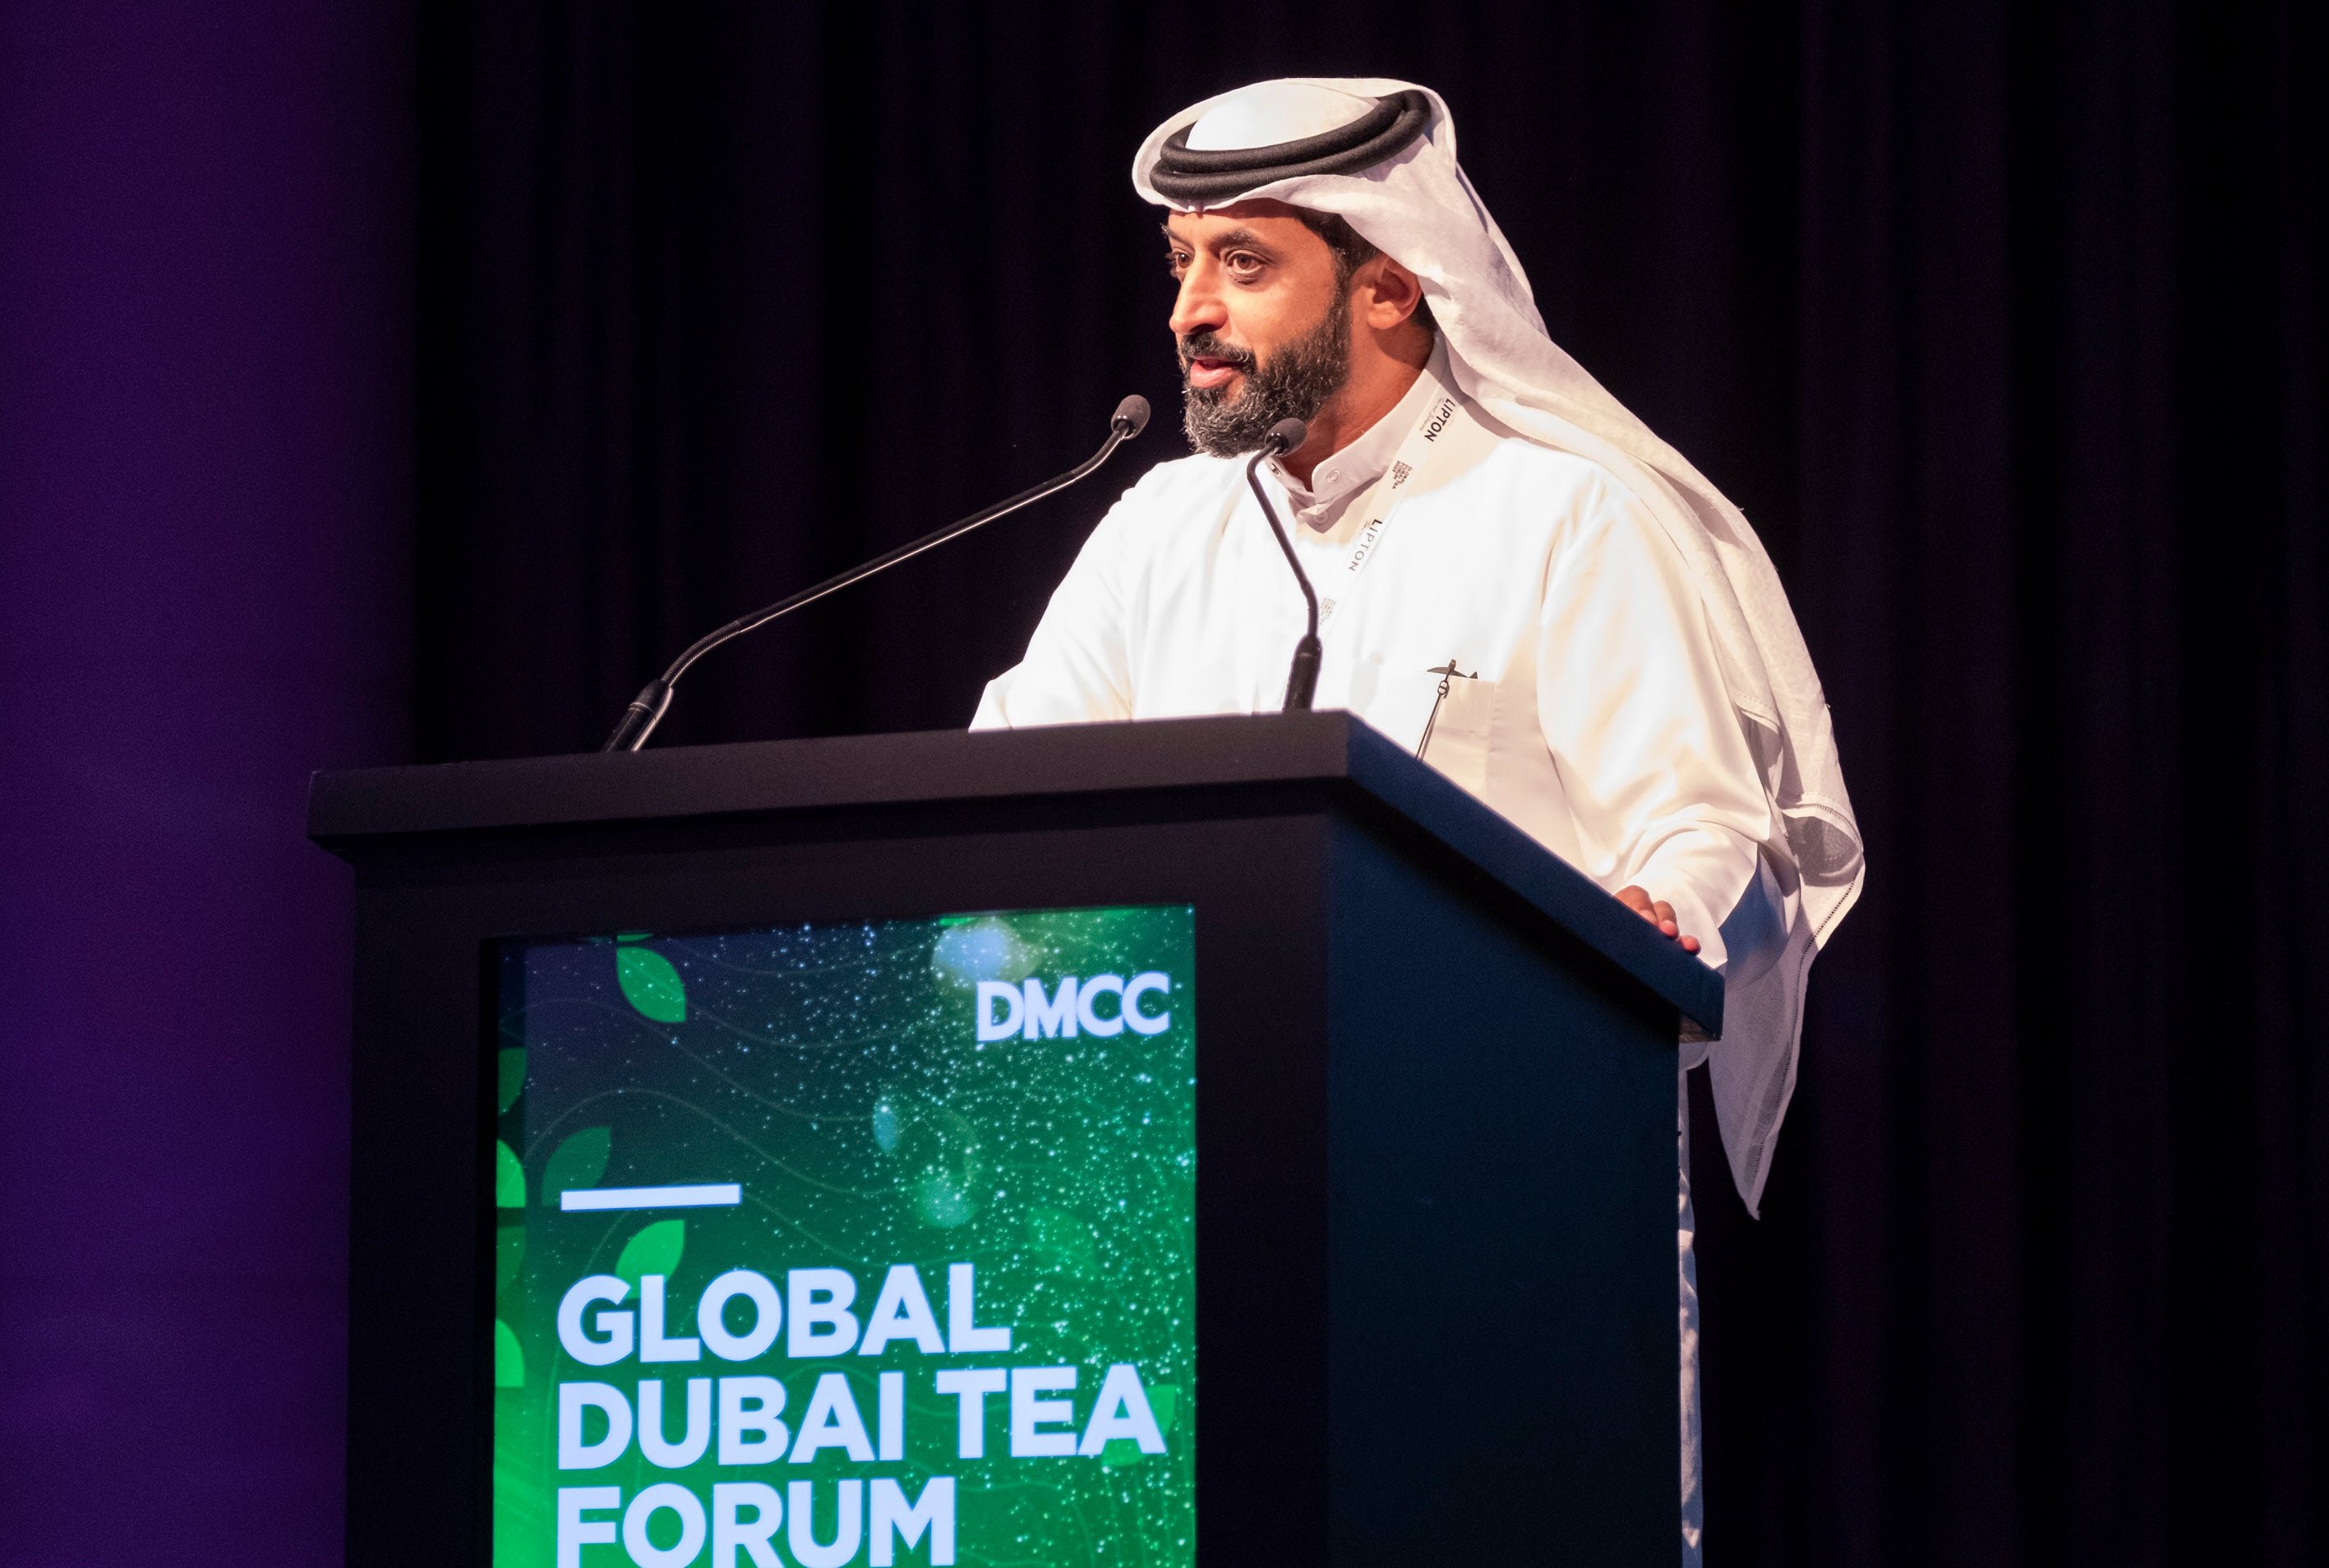 Global Dubai Tea Forum